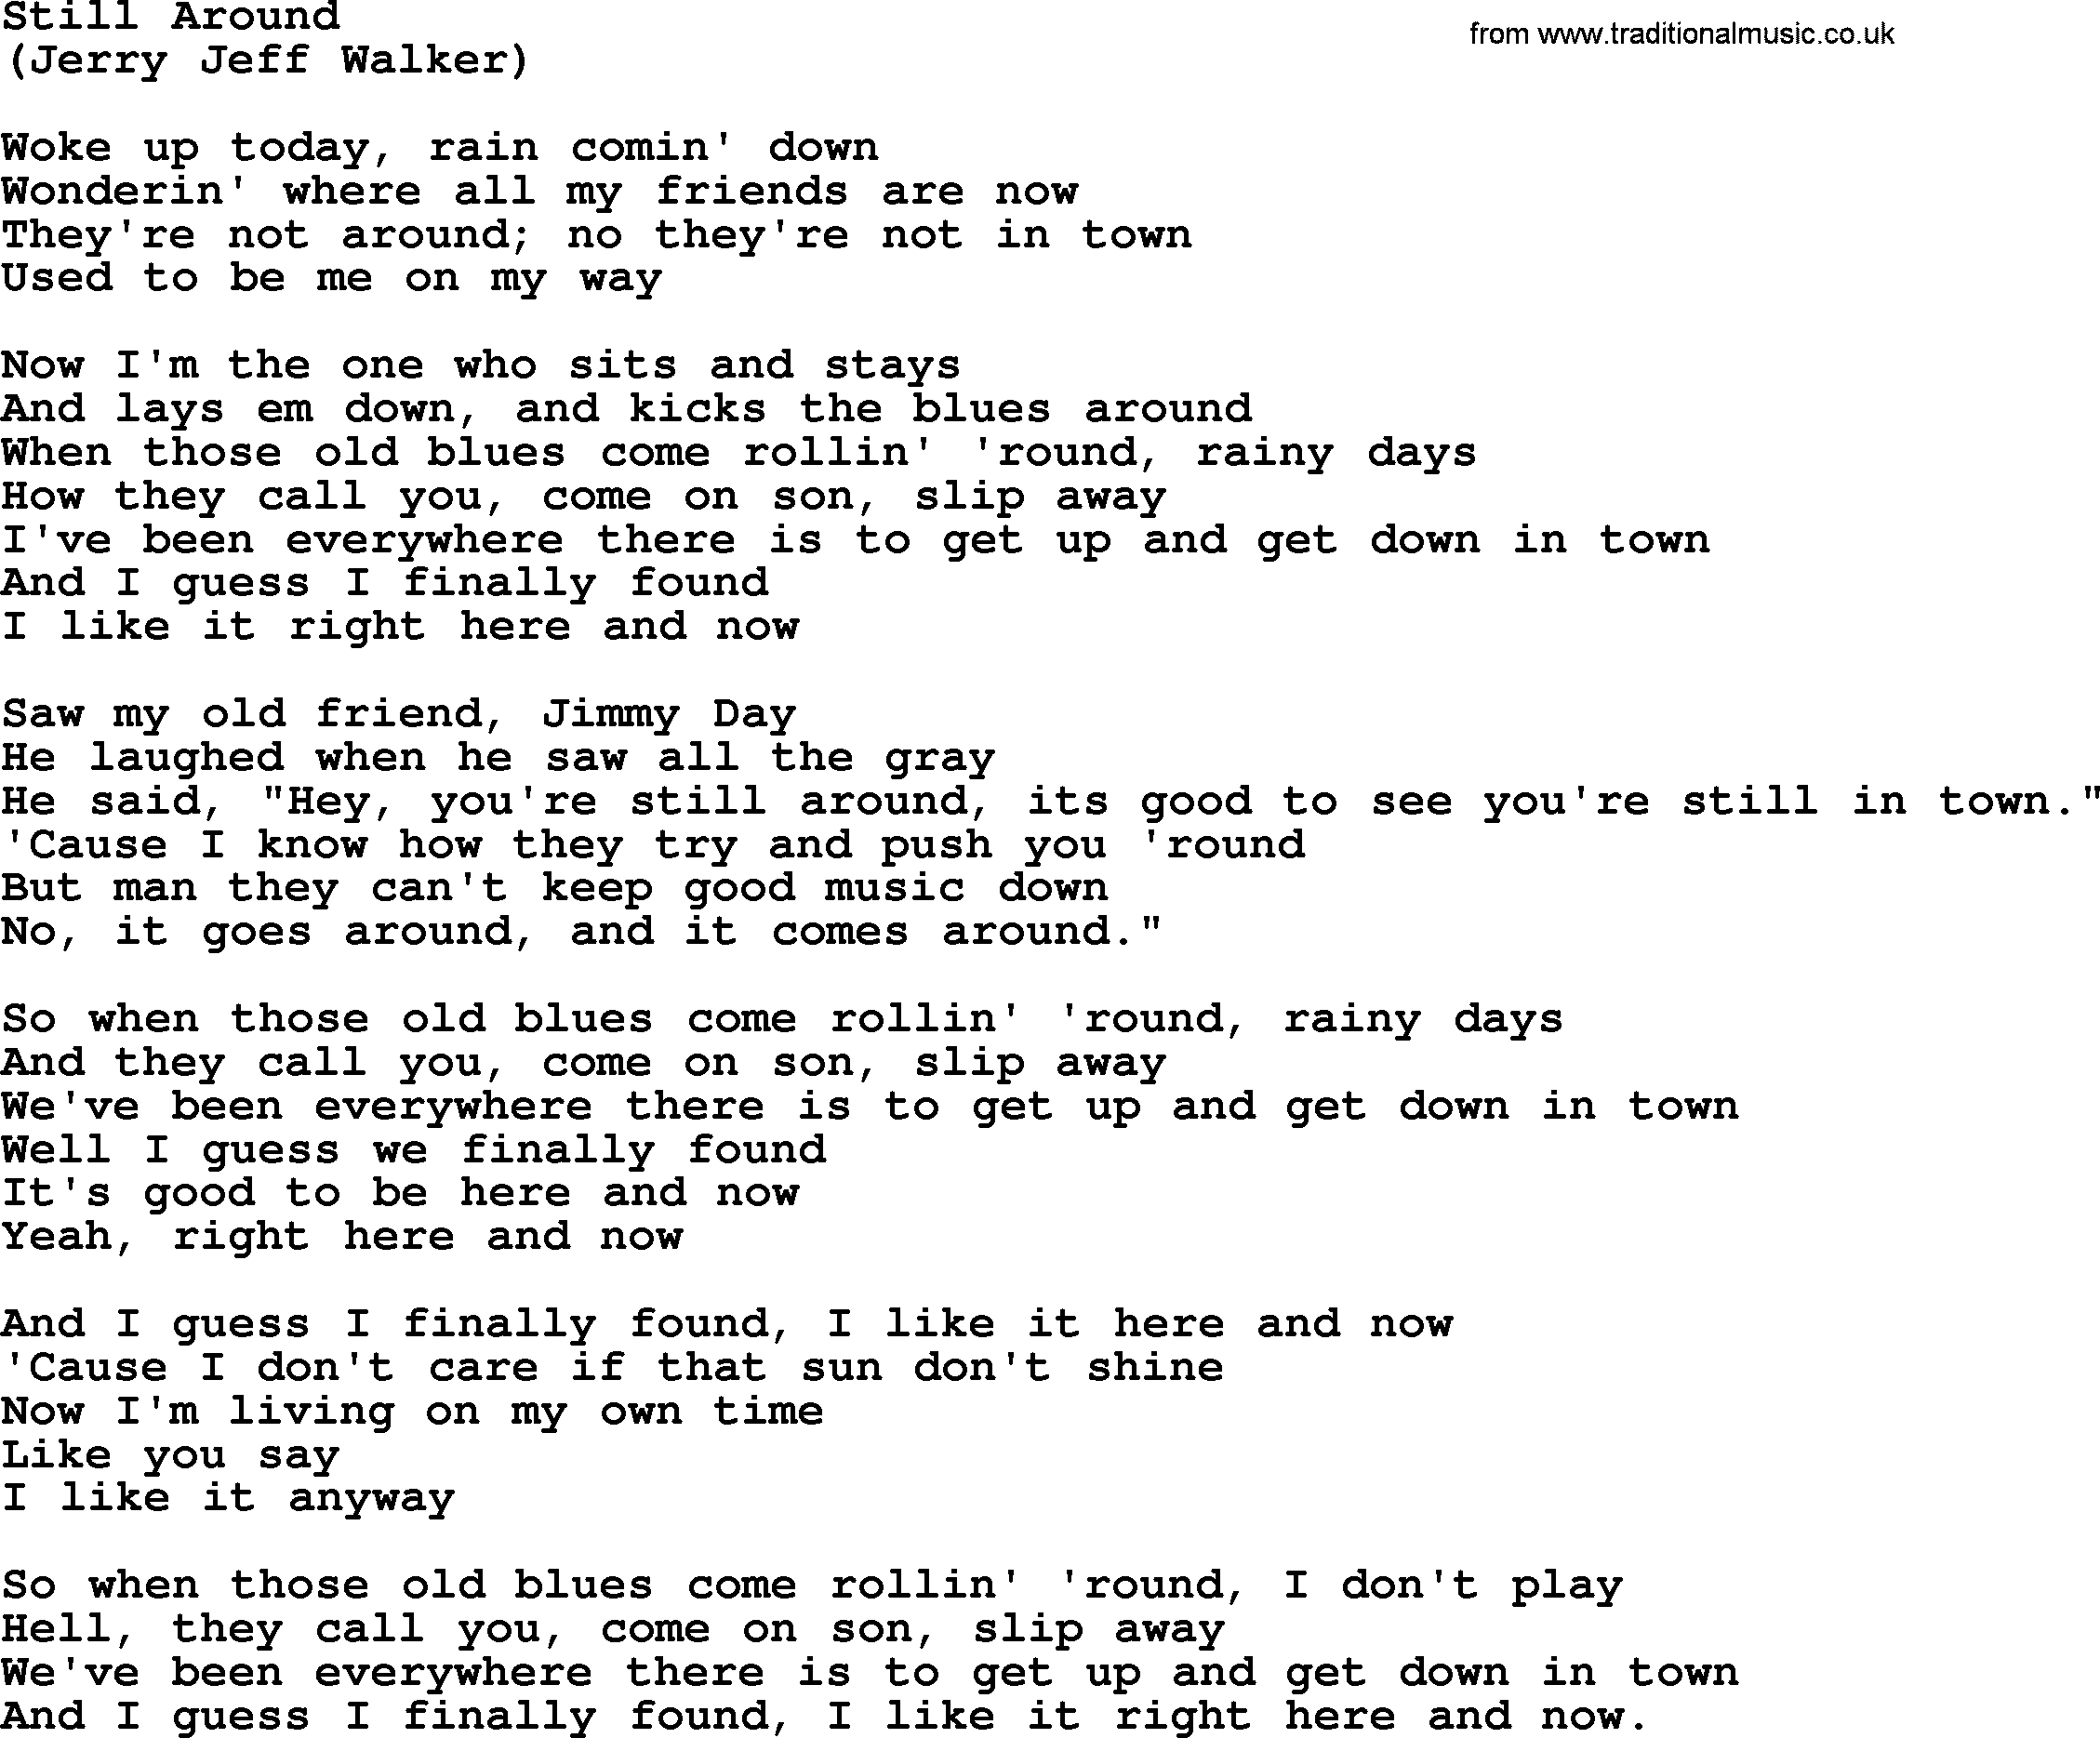 The Byrds song Still Around, lyrics